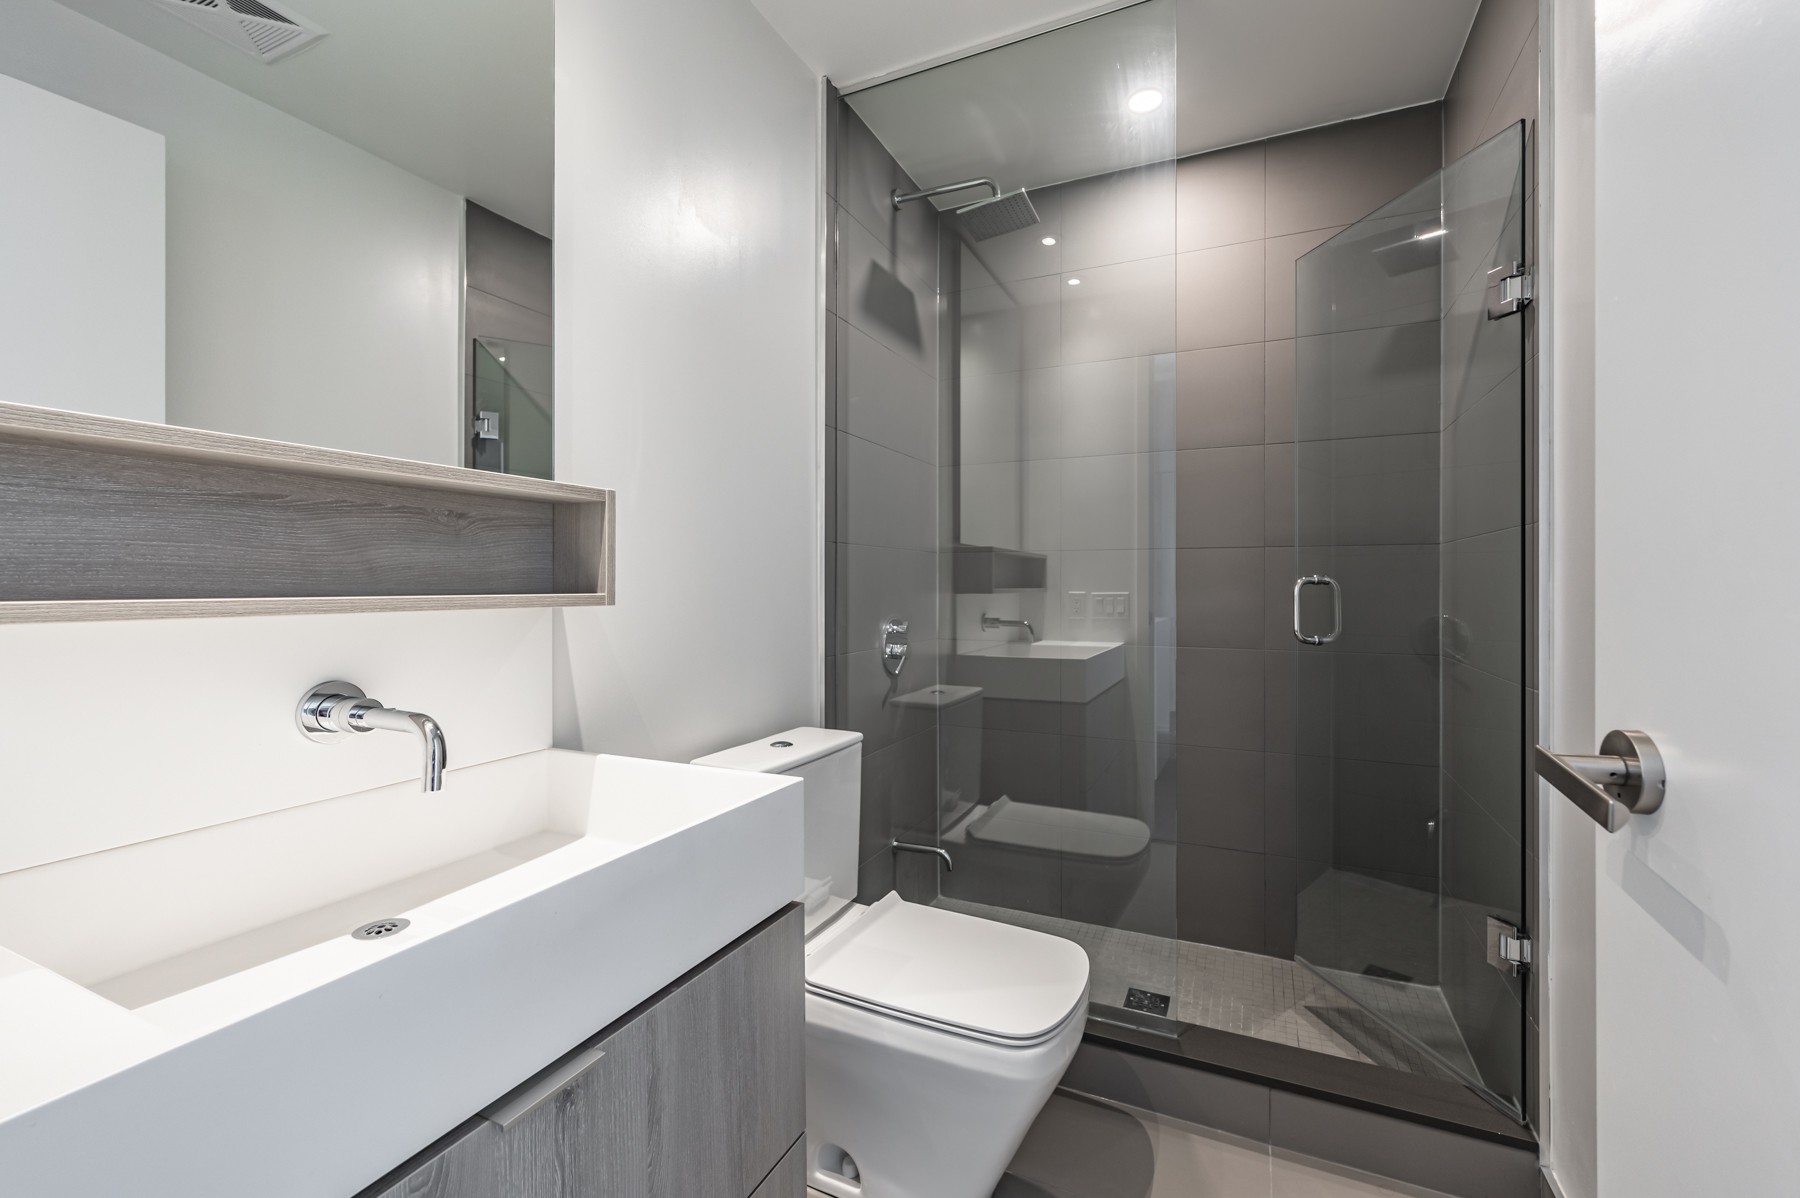 1702-5 Soudan Ave bathroom with frameless glass shower, dark tiles, shelves, wall-mounted faucet and ceramic tiles.